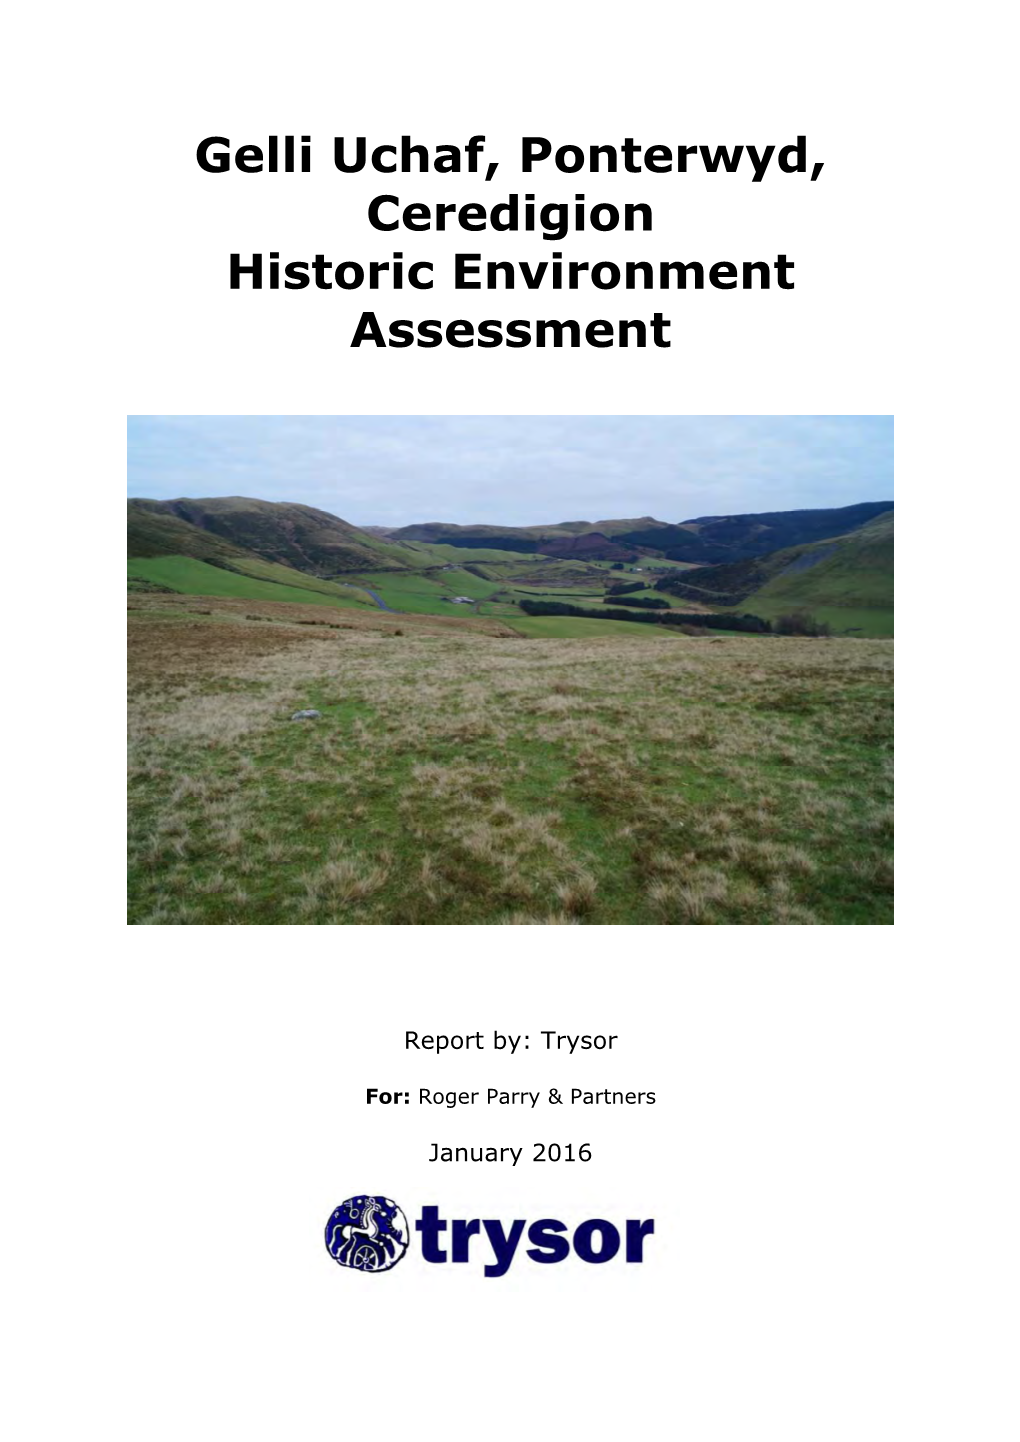 Gelli Uchaf, Ponterwyd, Ceredigion Historic Environment Assessment